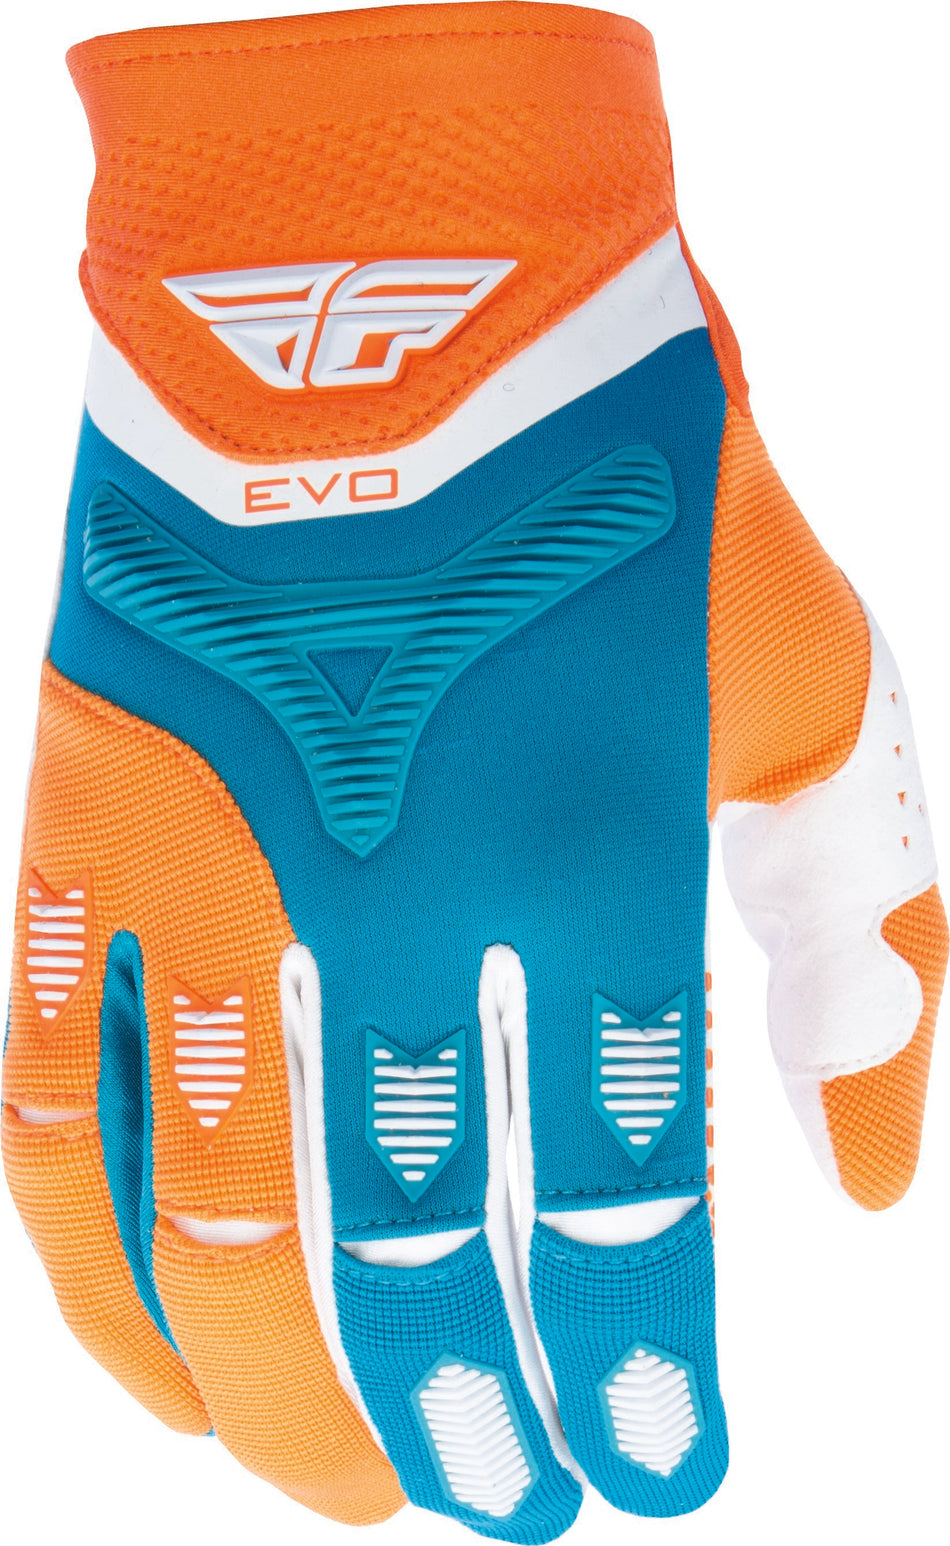 FLY RACING Evo Glove Orange/Dark Teal Yl 370-11706